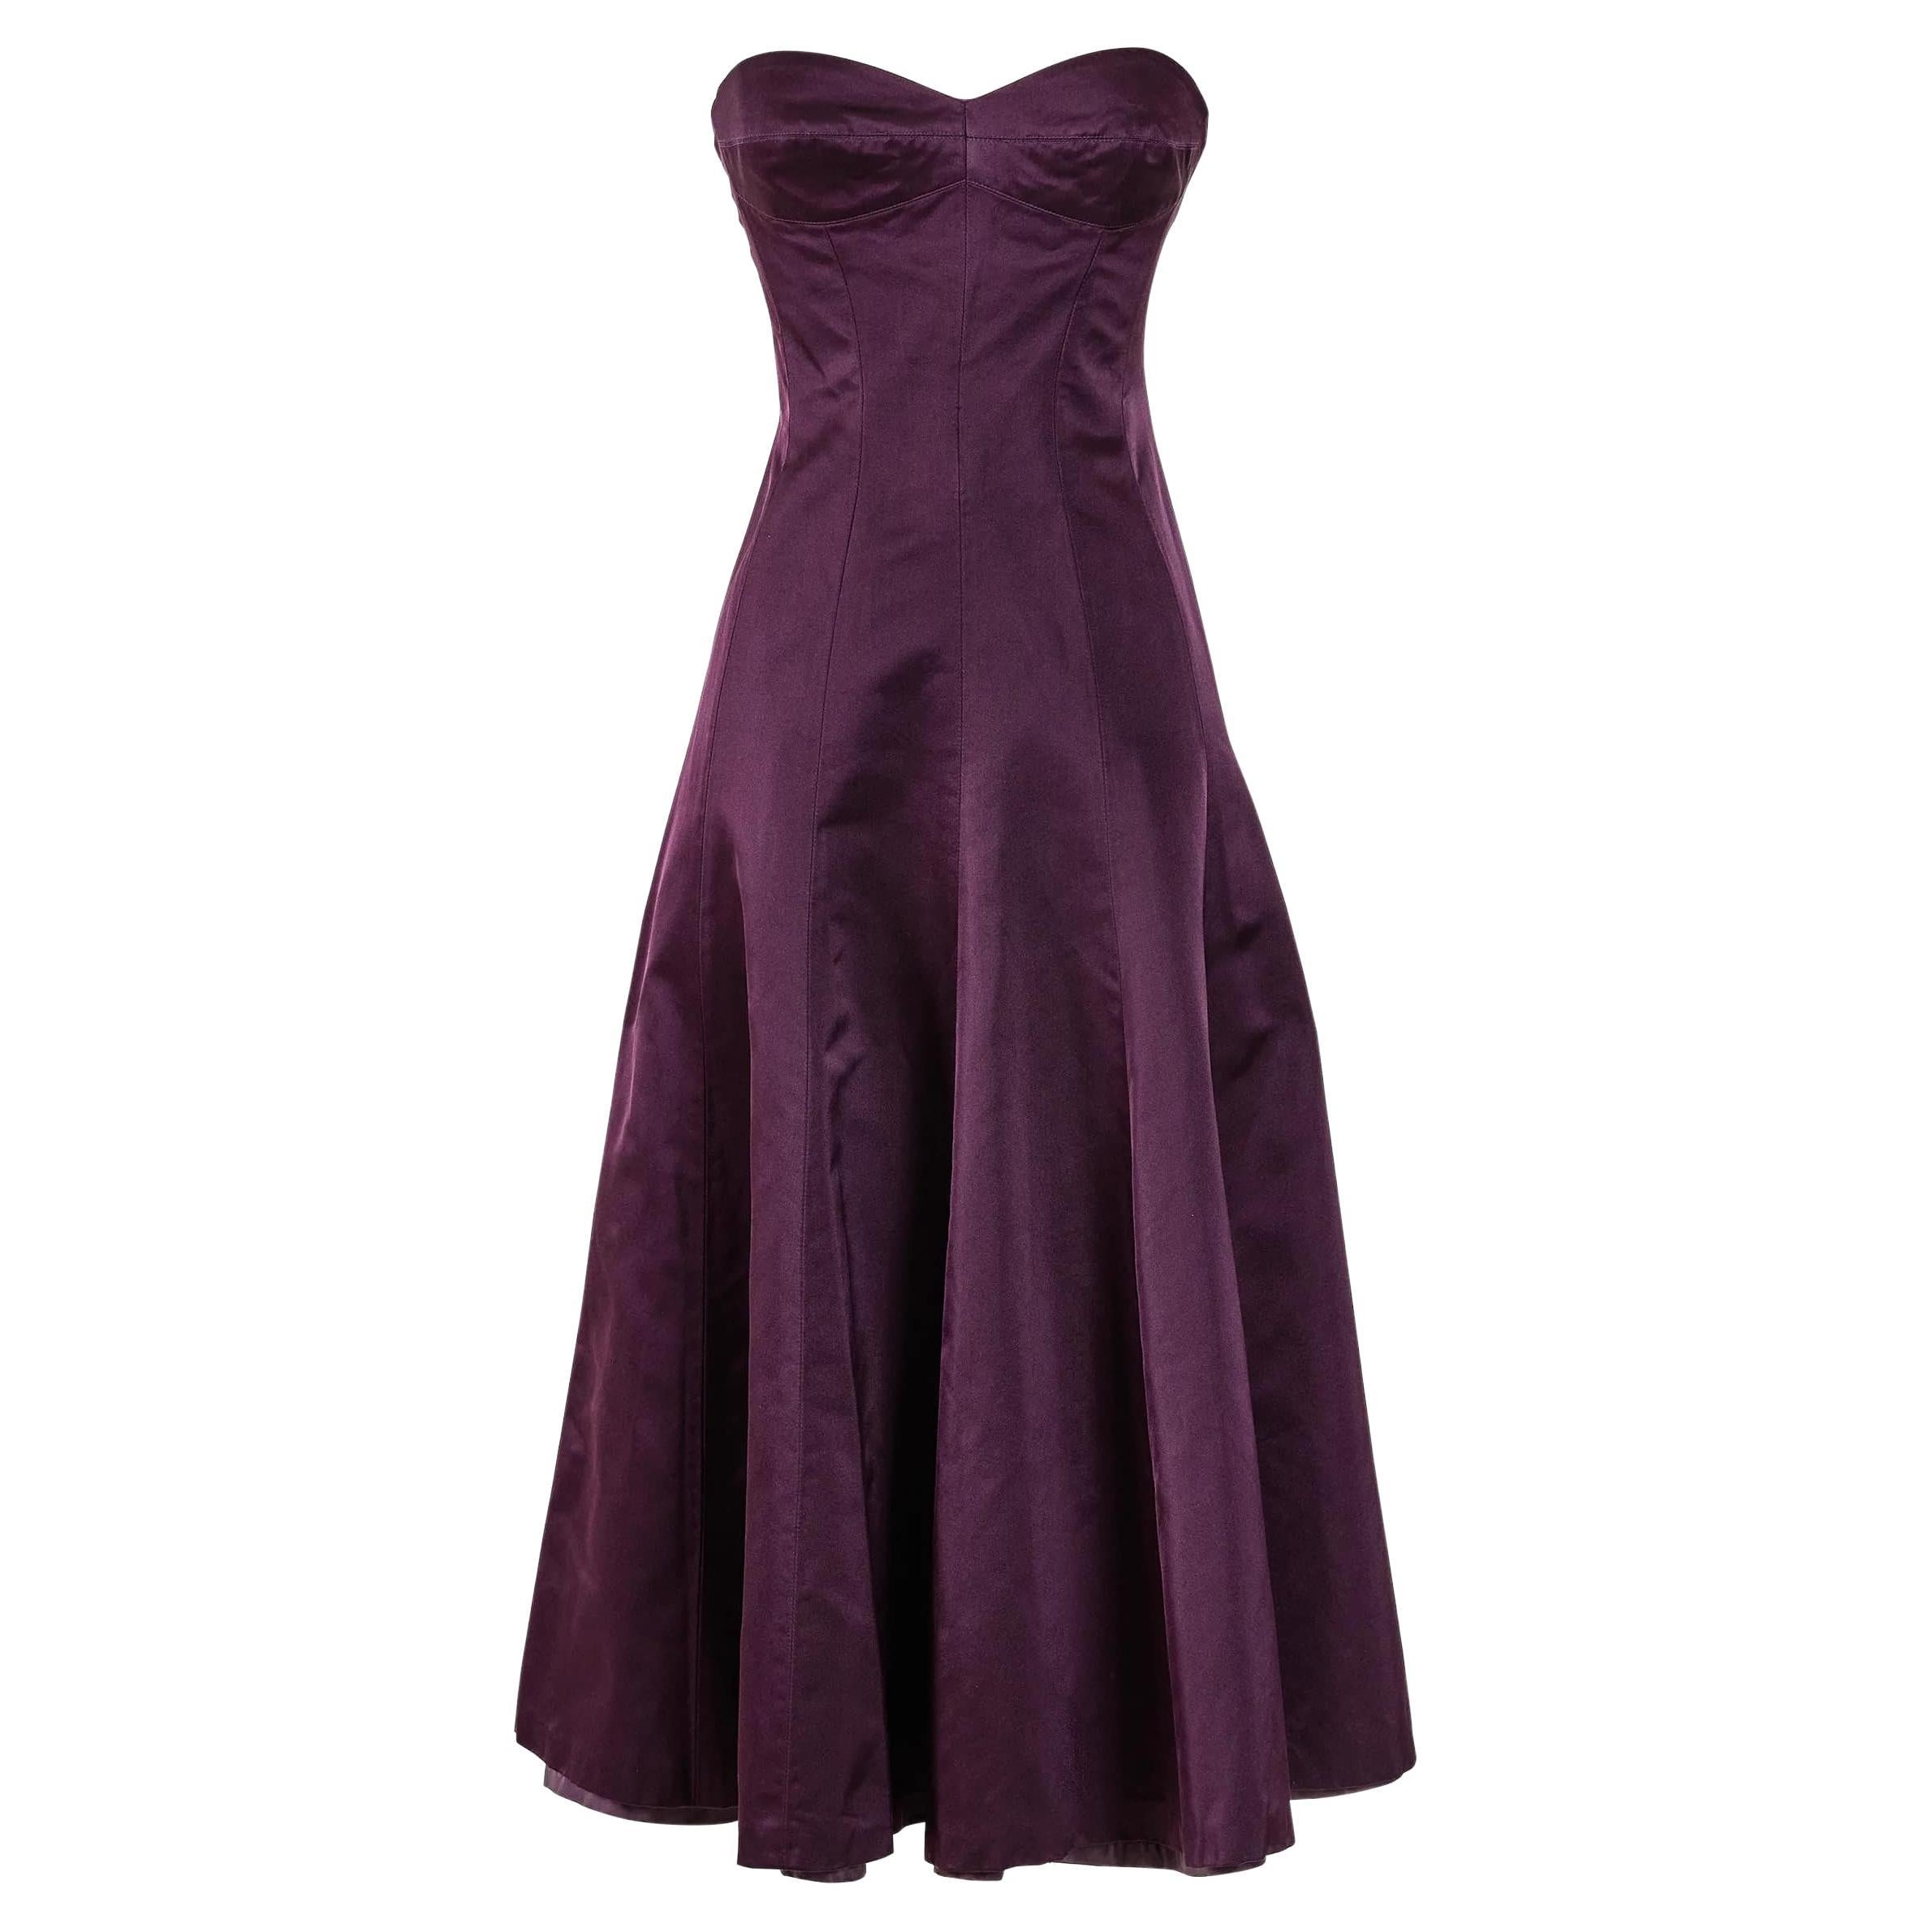 A/W 2001 Chloé by Stella McCartney Purple Strapless Silk Midi Dress